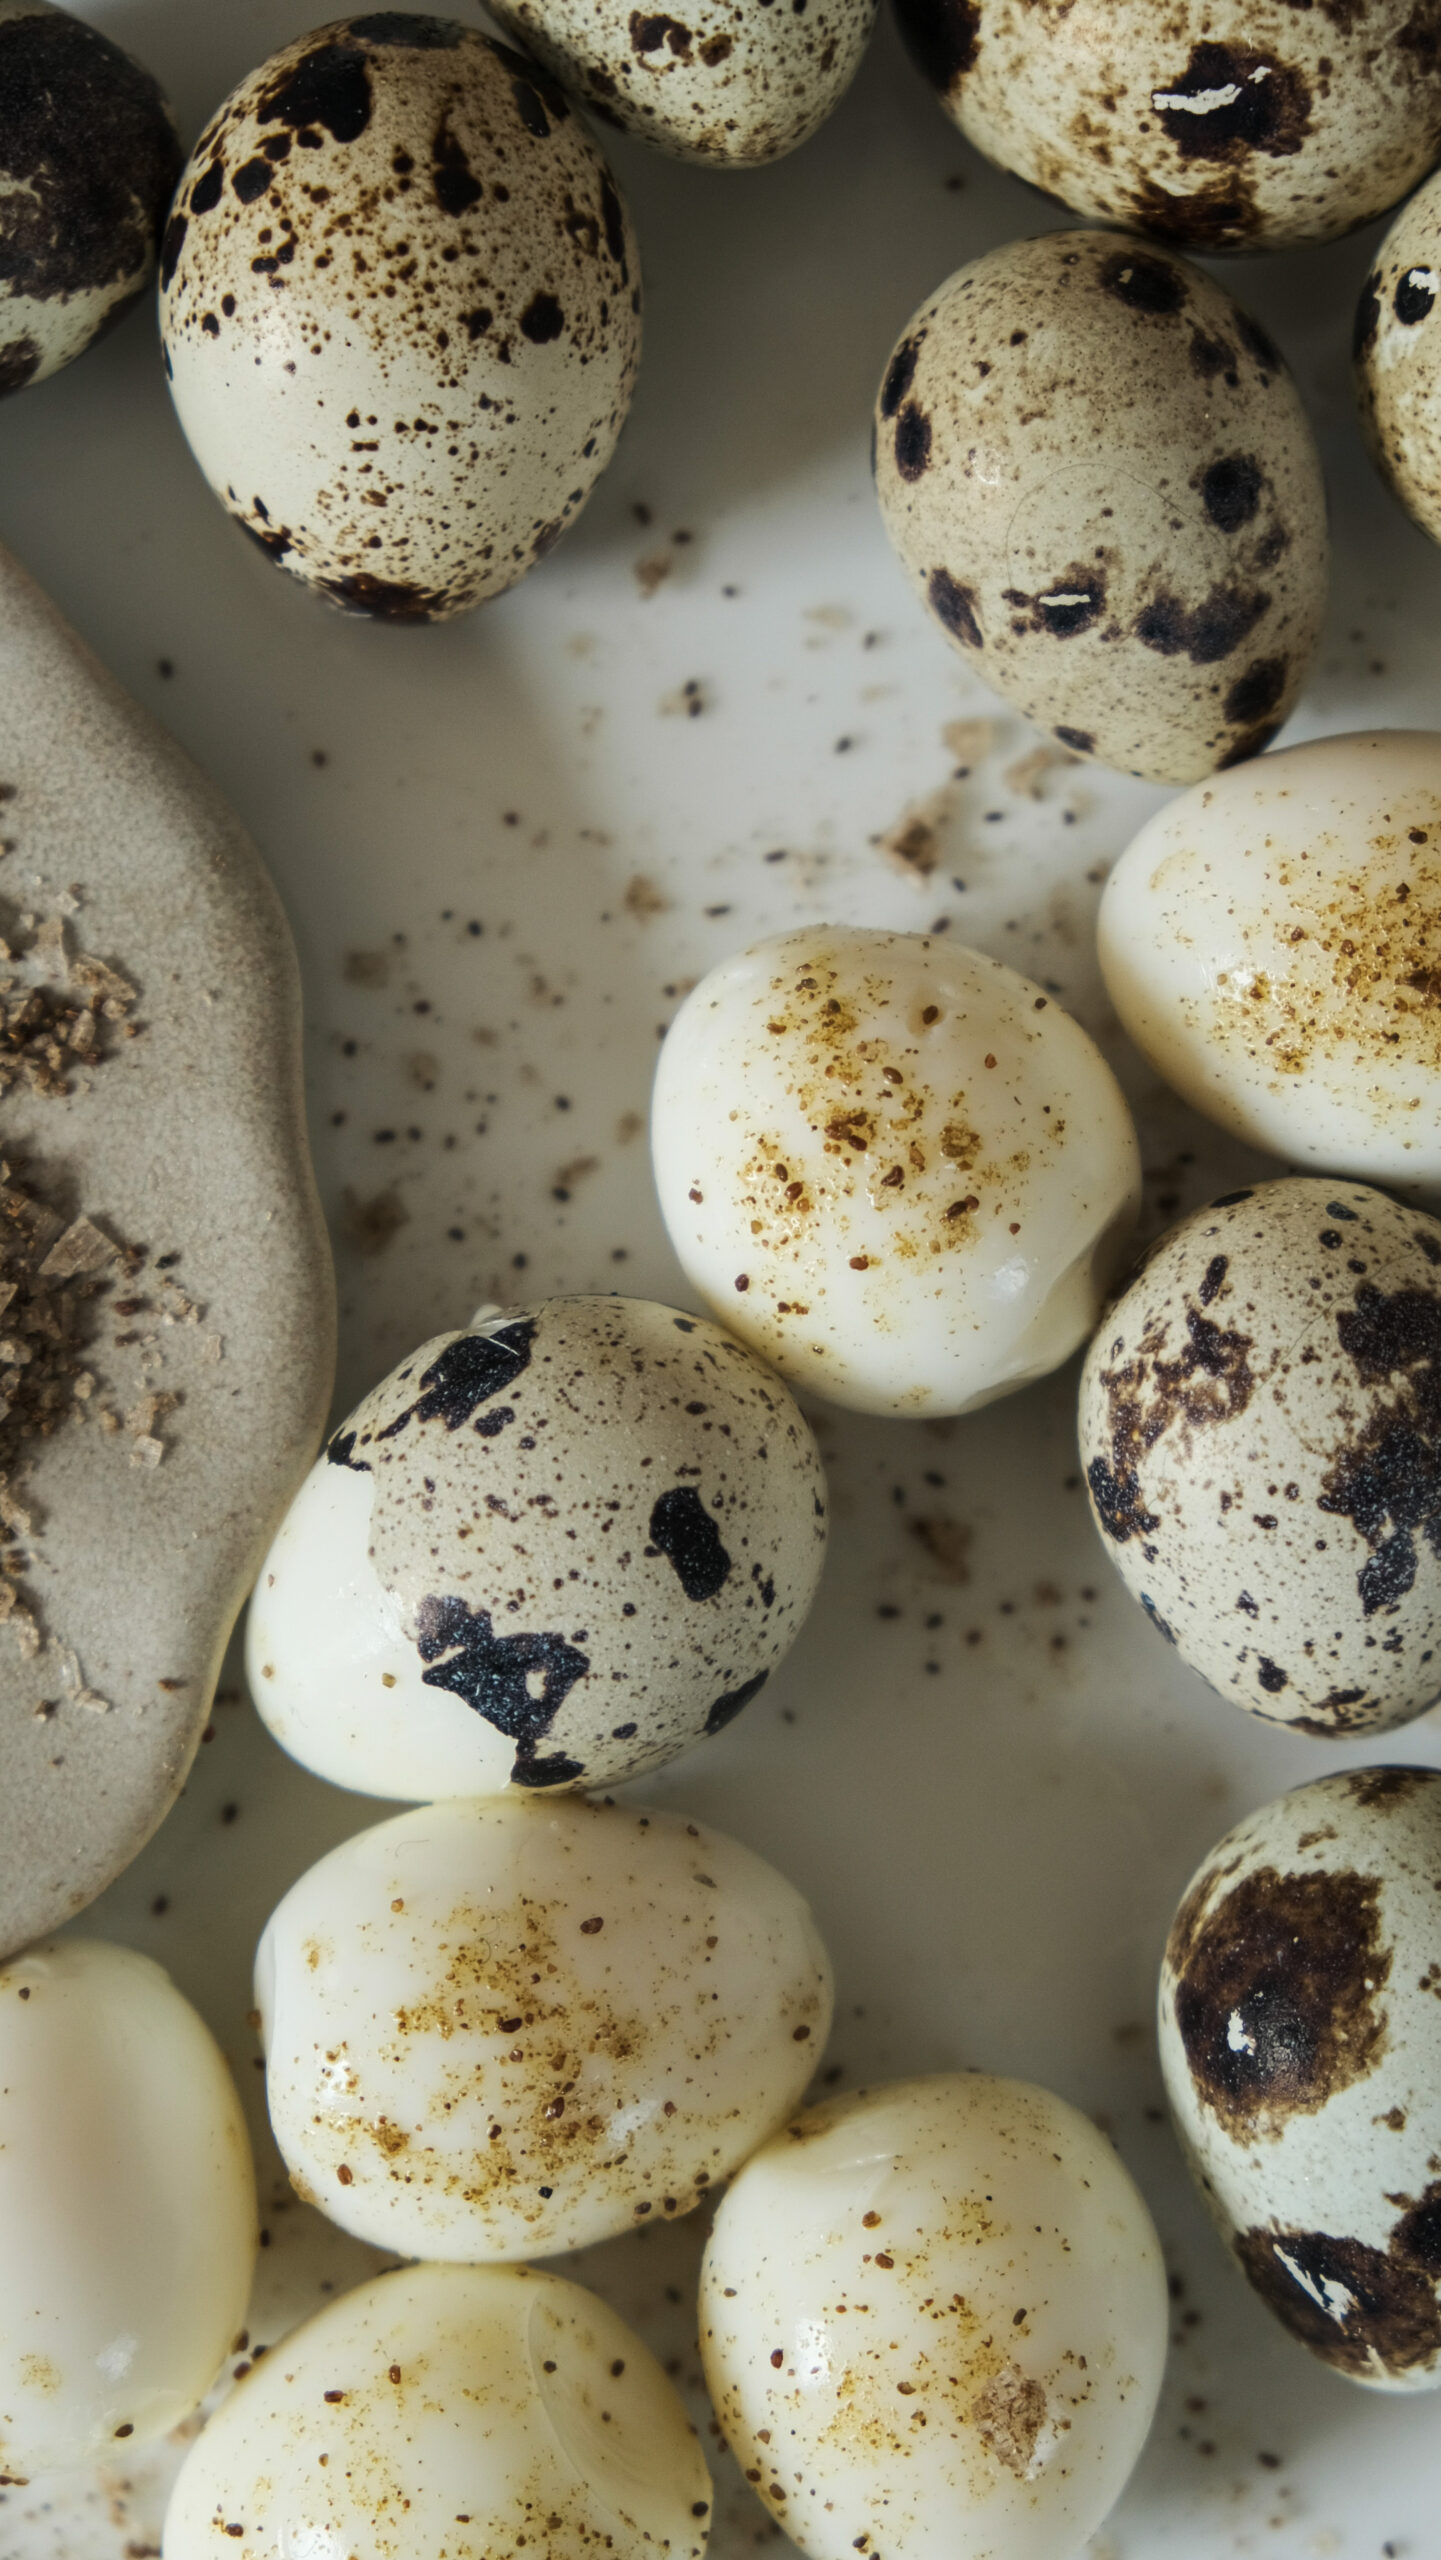 How to eat hard boiled quail eggs